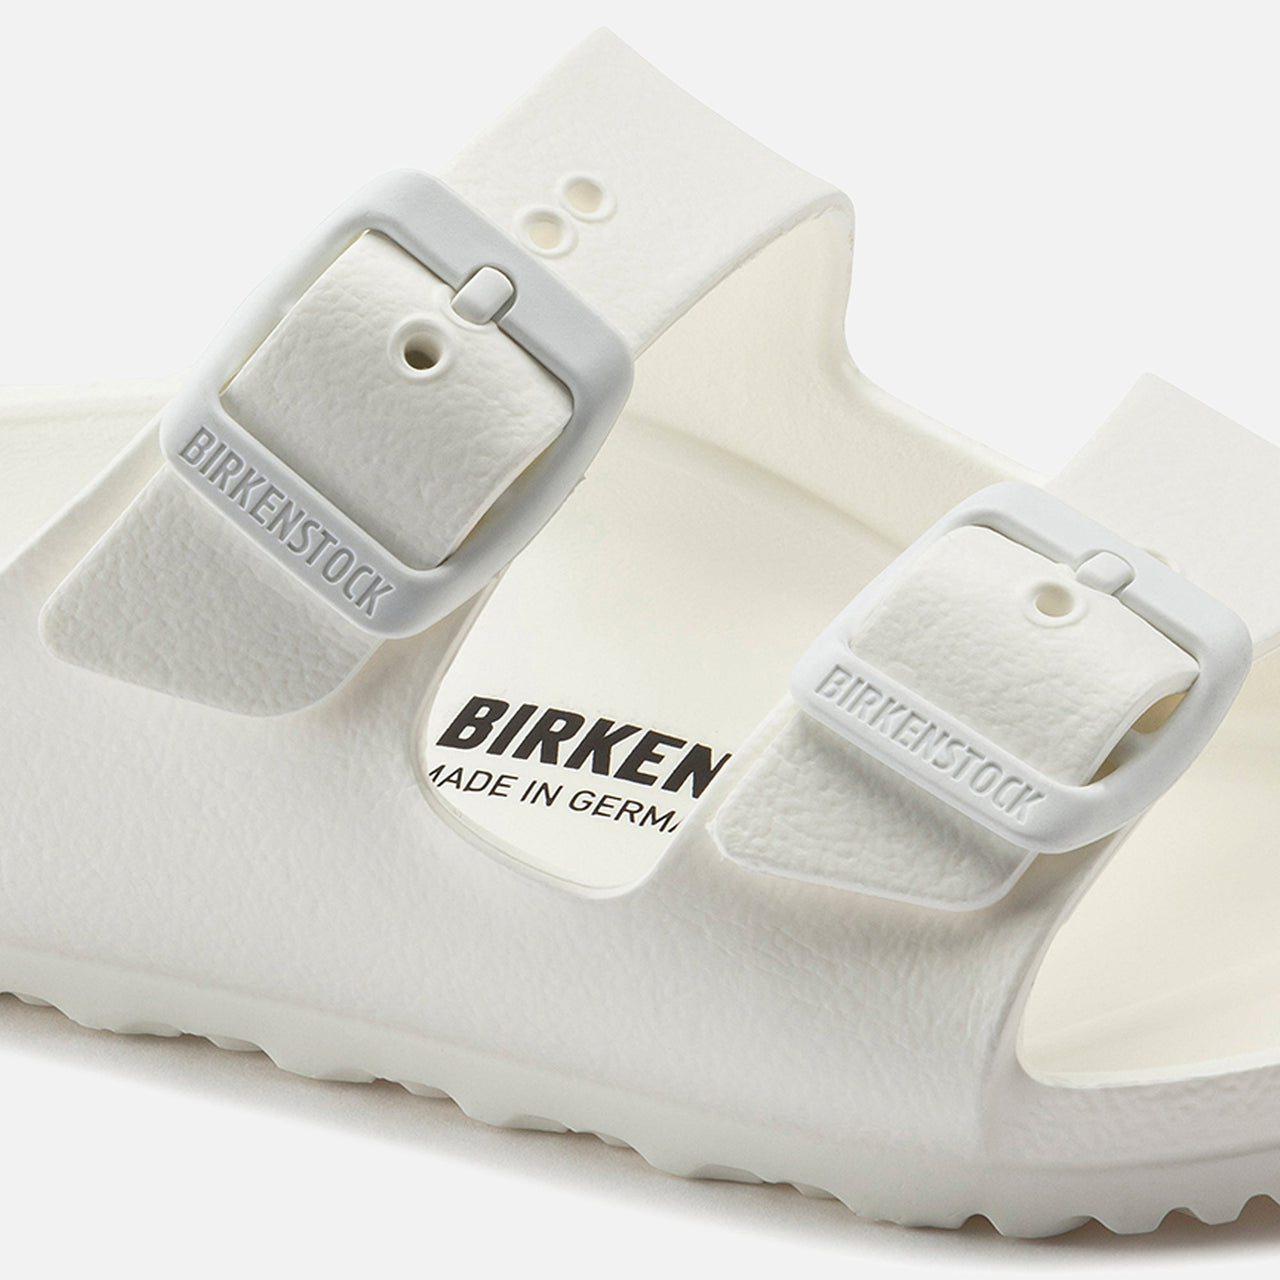 Birkenstock Kids Arizona Eva White Sandals featuring Classic Two-Strap Design and Stylish White Color